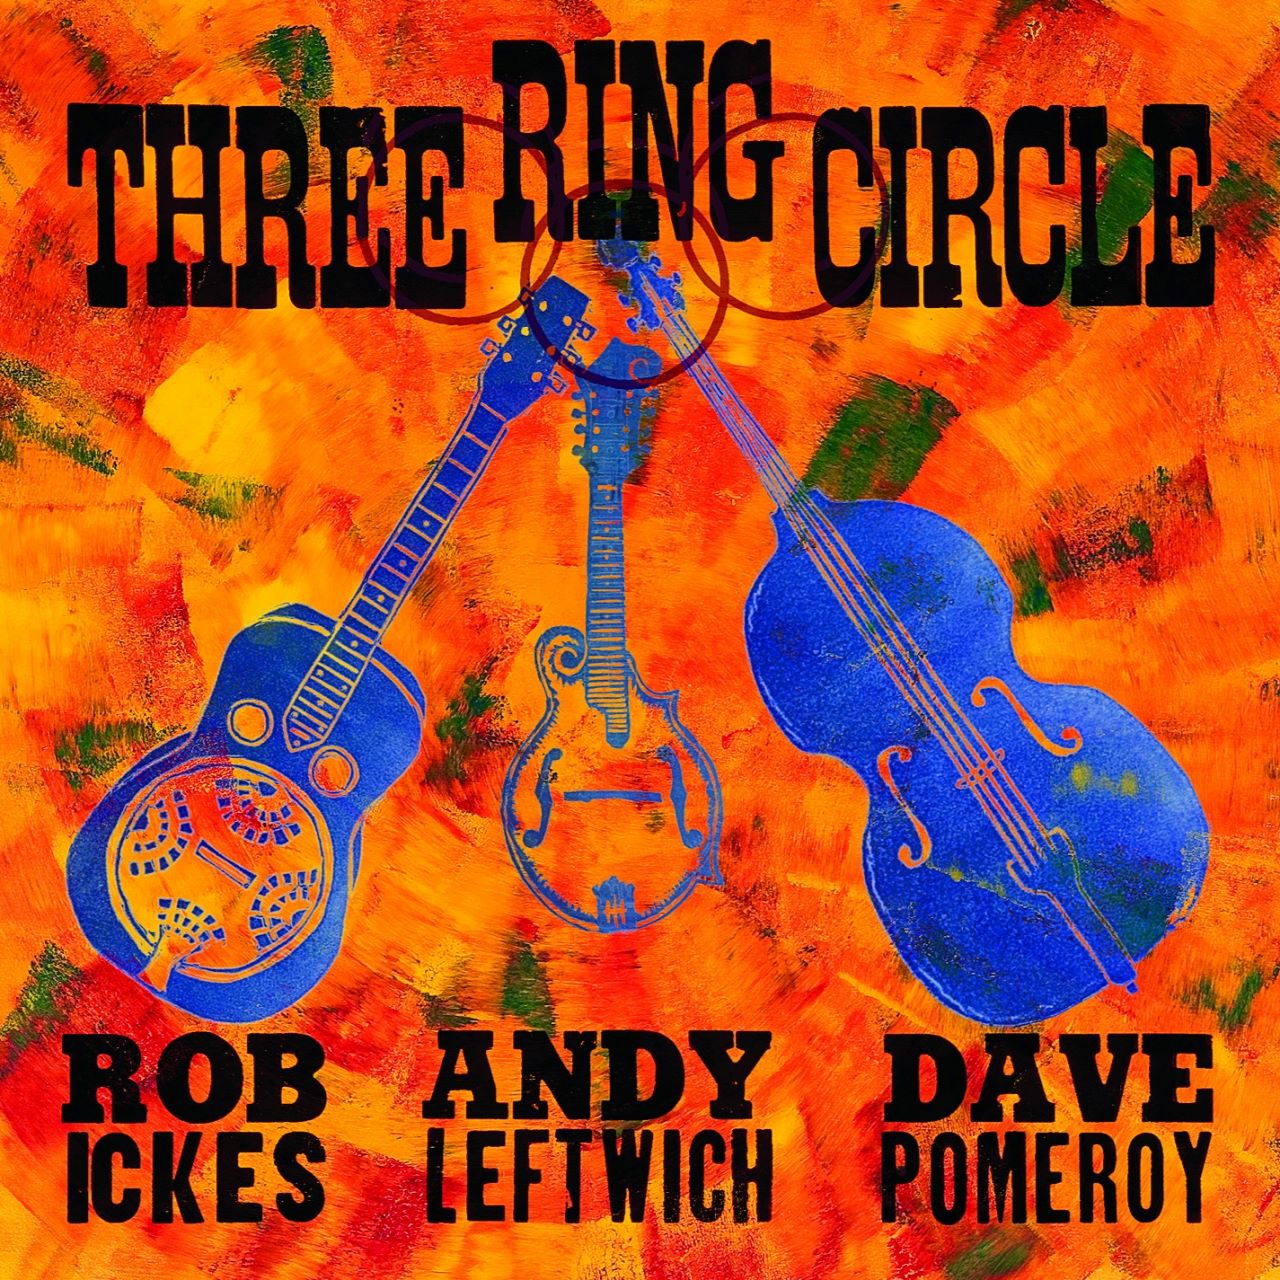 Three Ring Circle - Three Ring Circle cover album